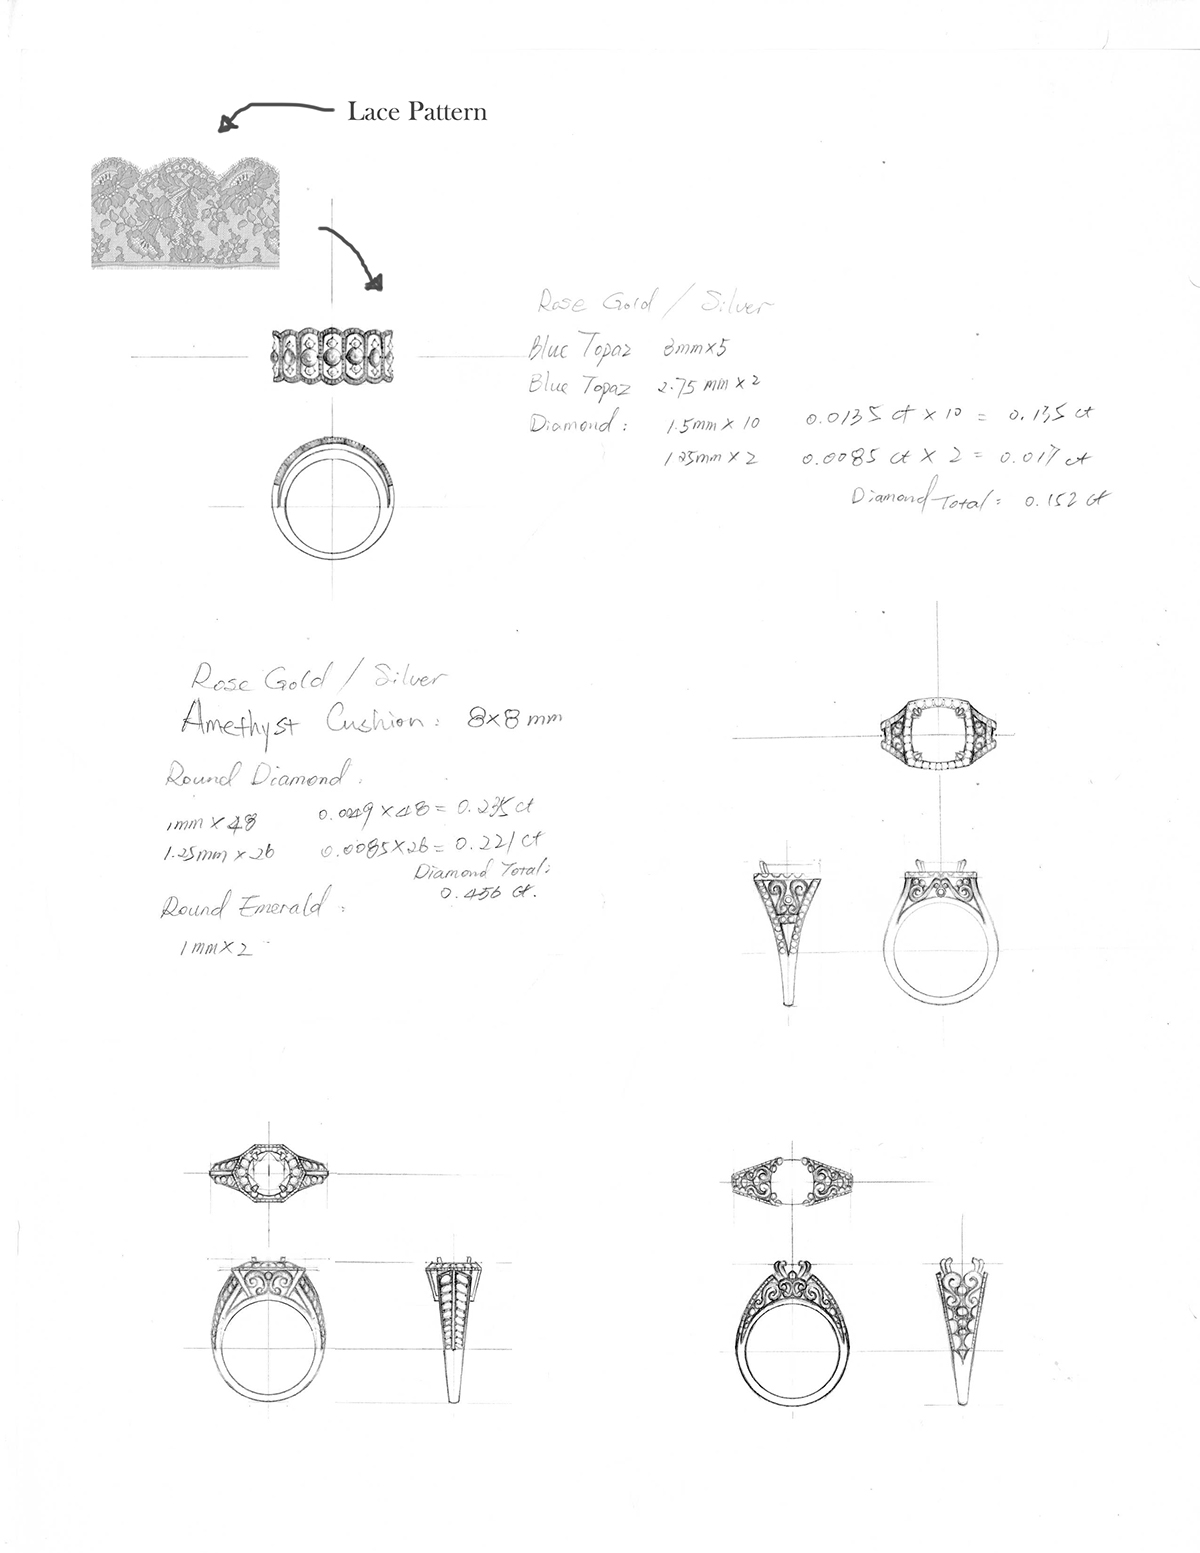 Sofia Vergara fine jewelry Sterling Jewelers technical drawing